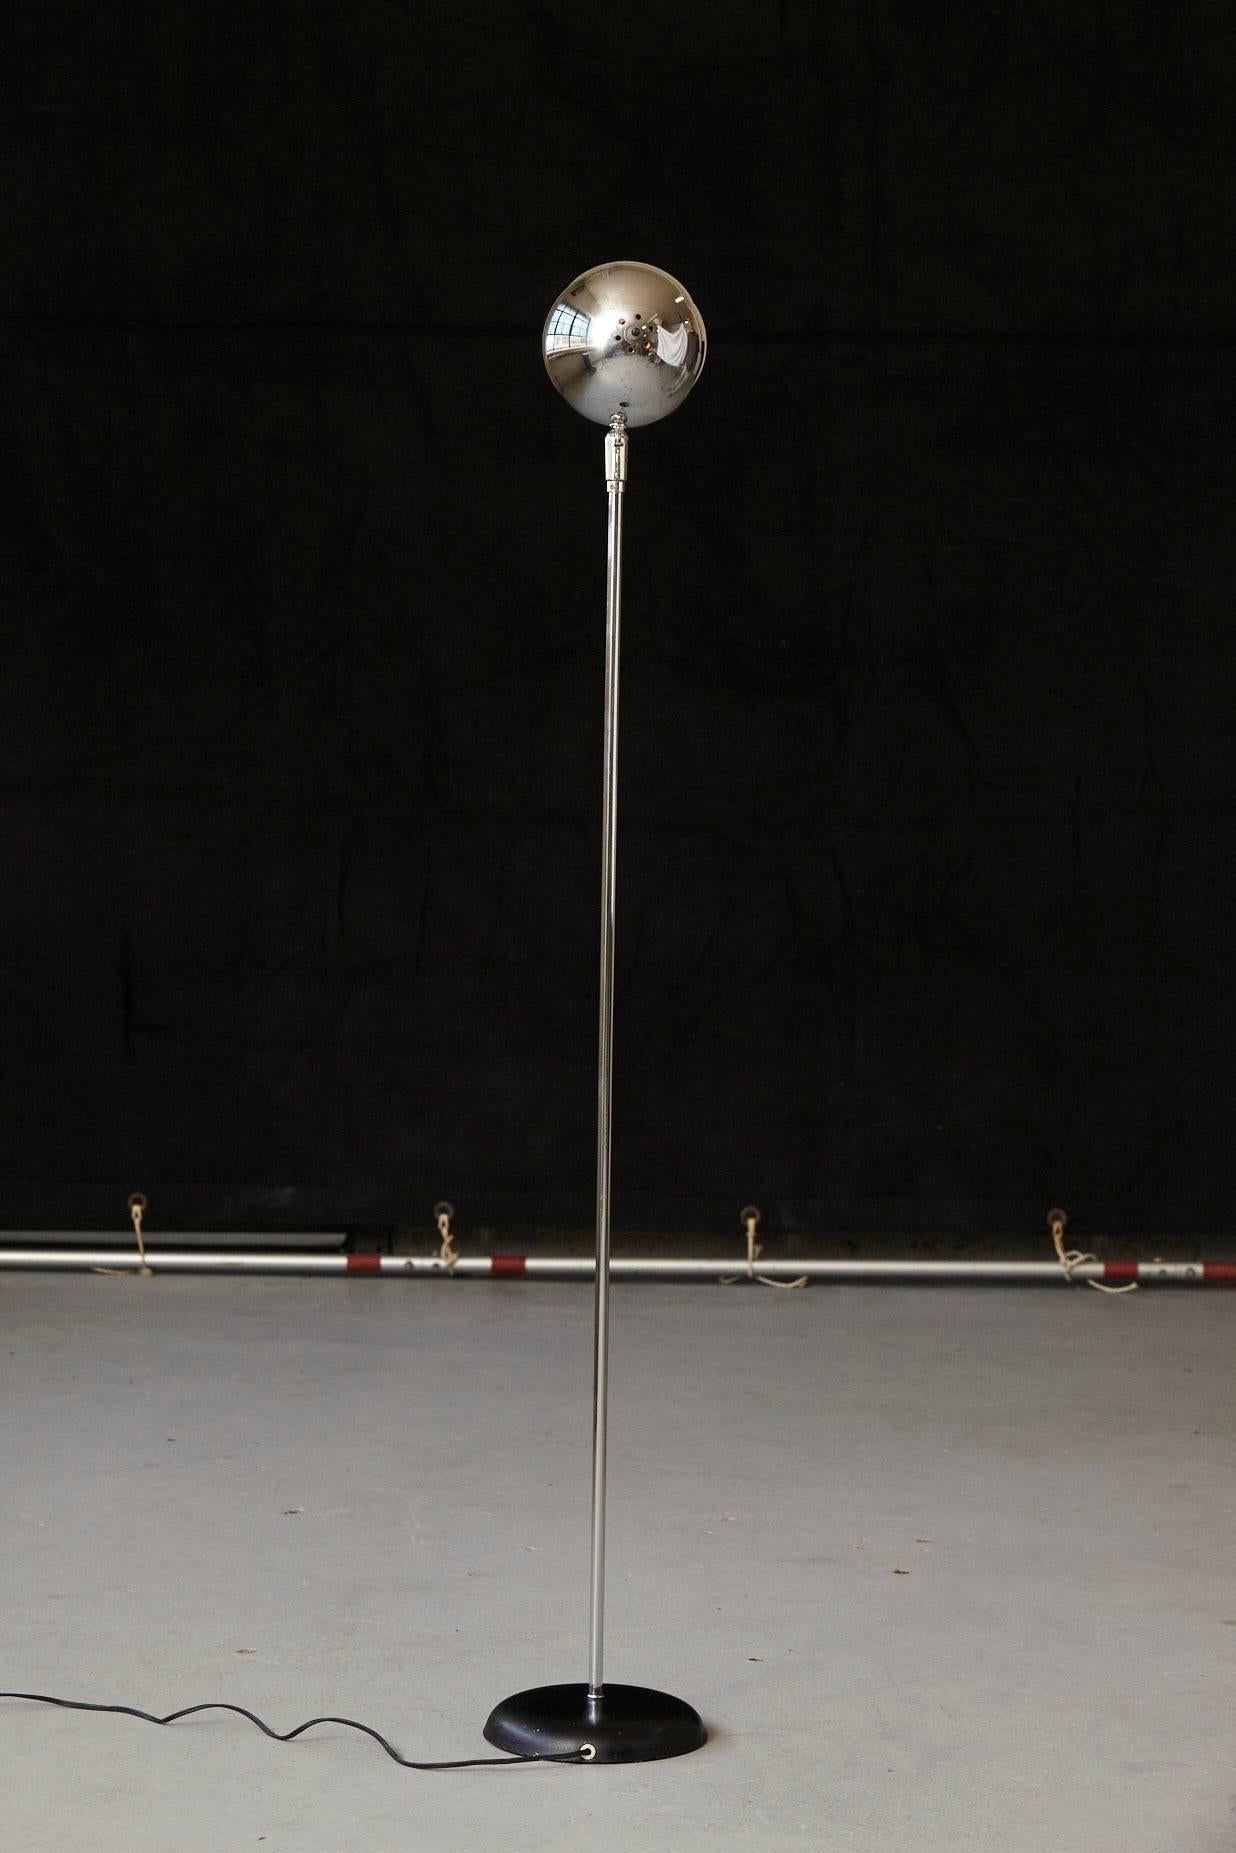 Minimalist chrome eyeball floor lamp in the style of Robert Sonneman with black base. The chrome head is adjustable.